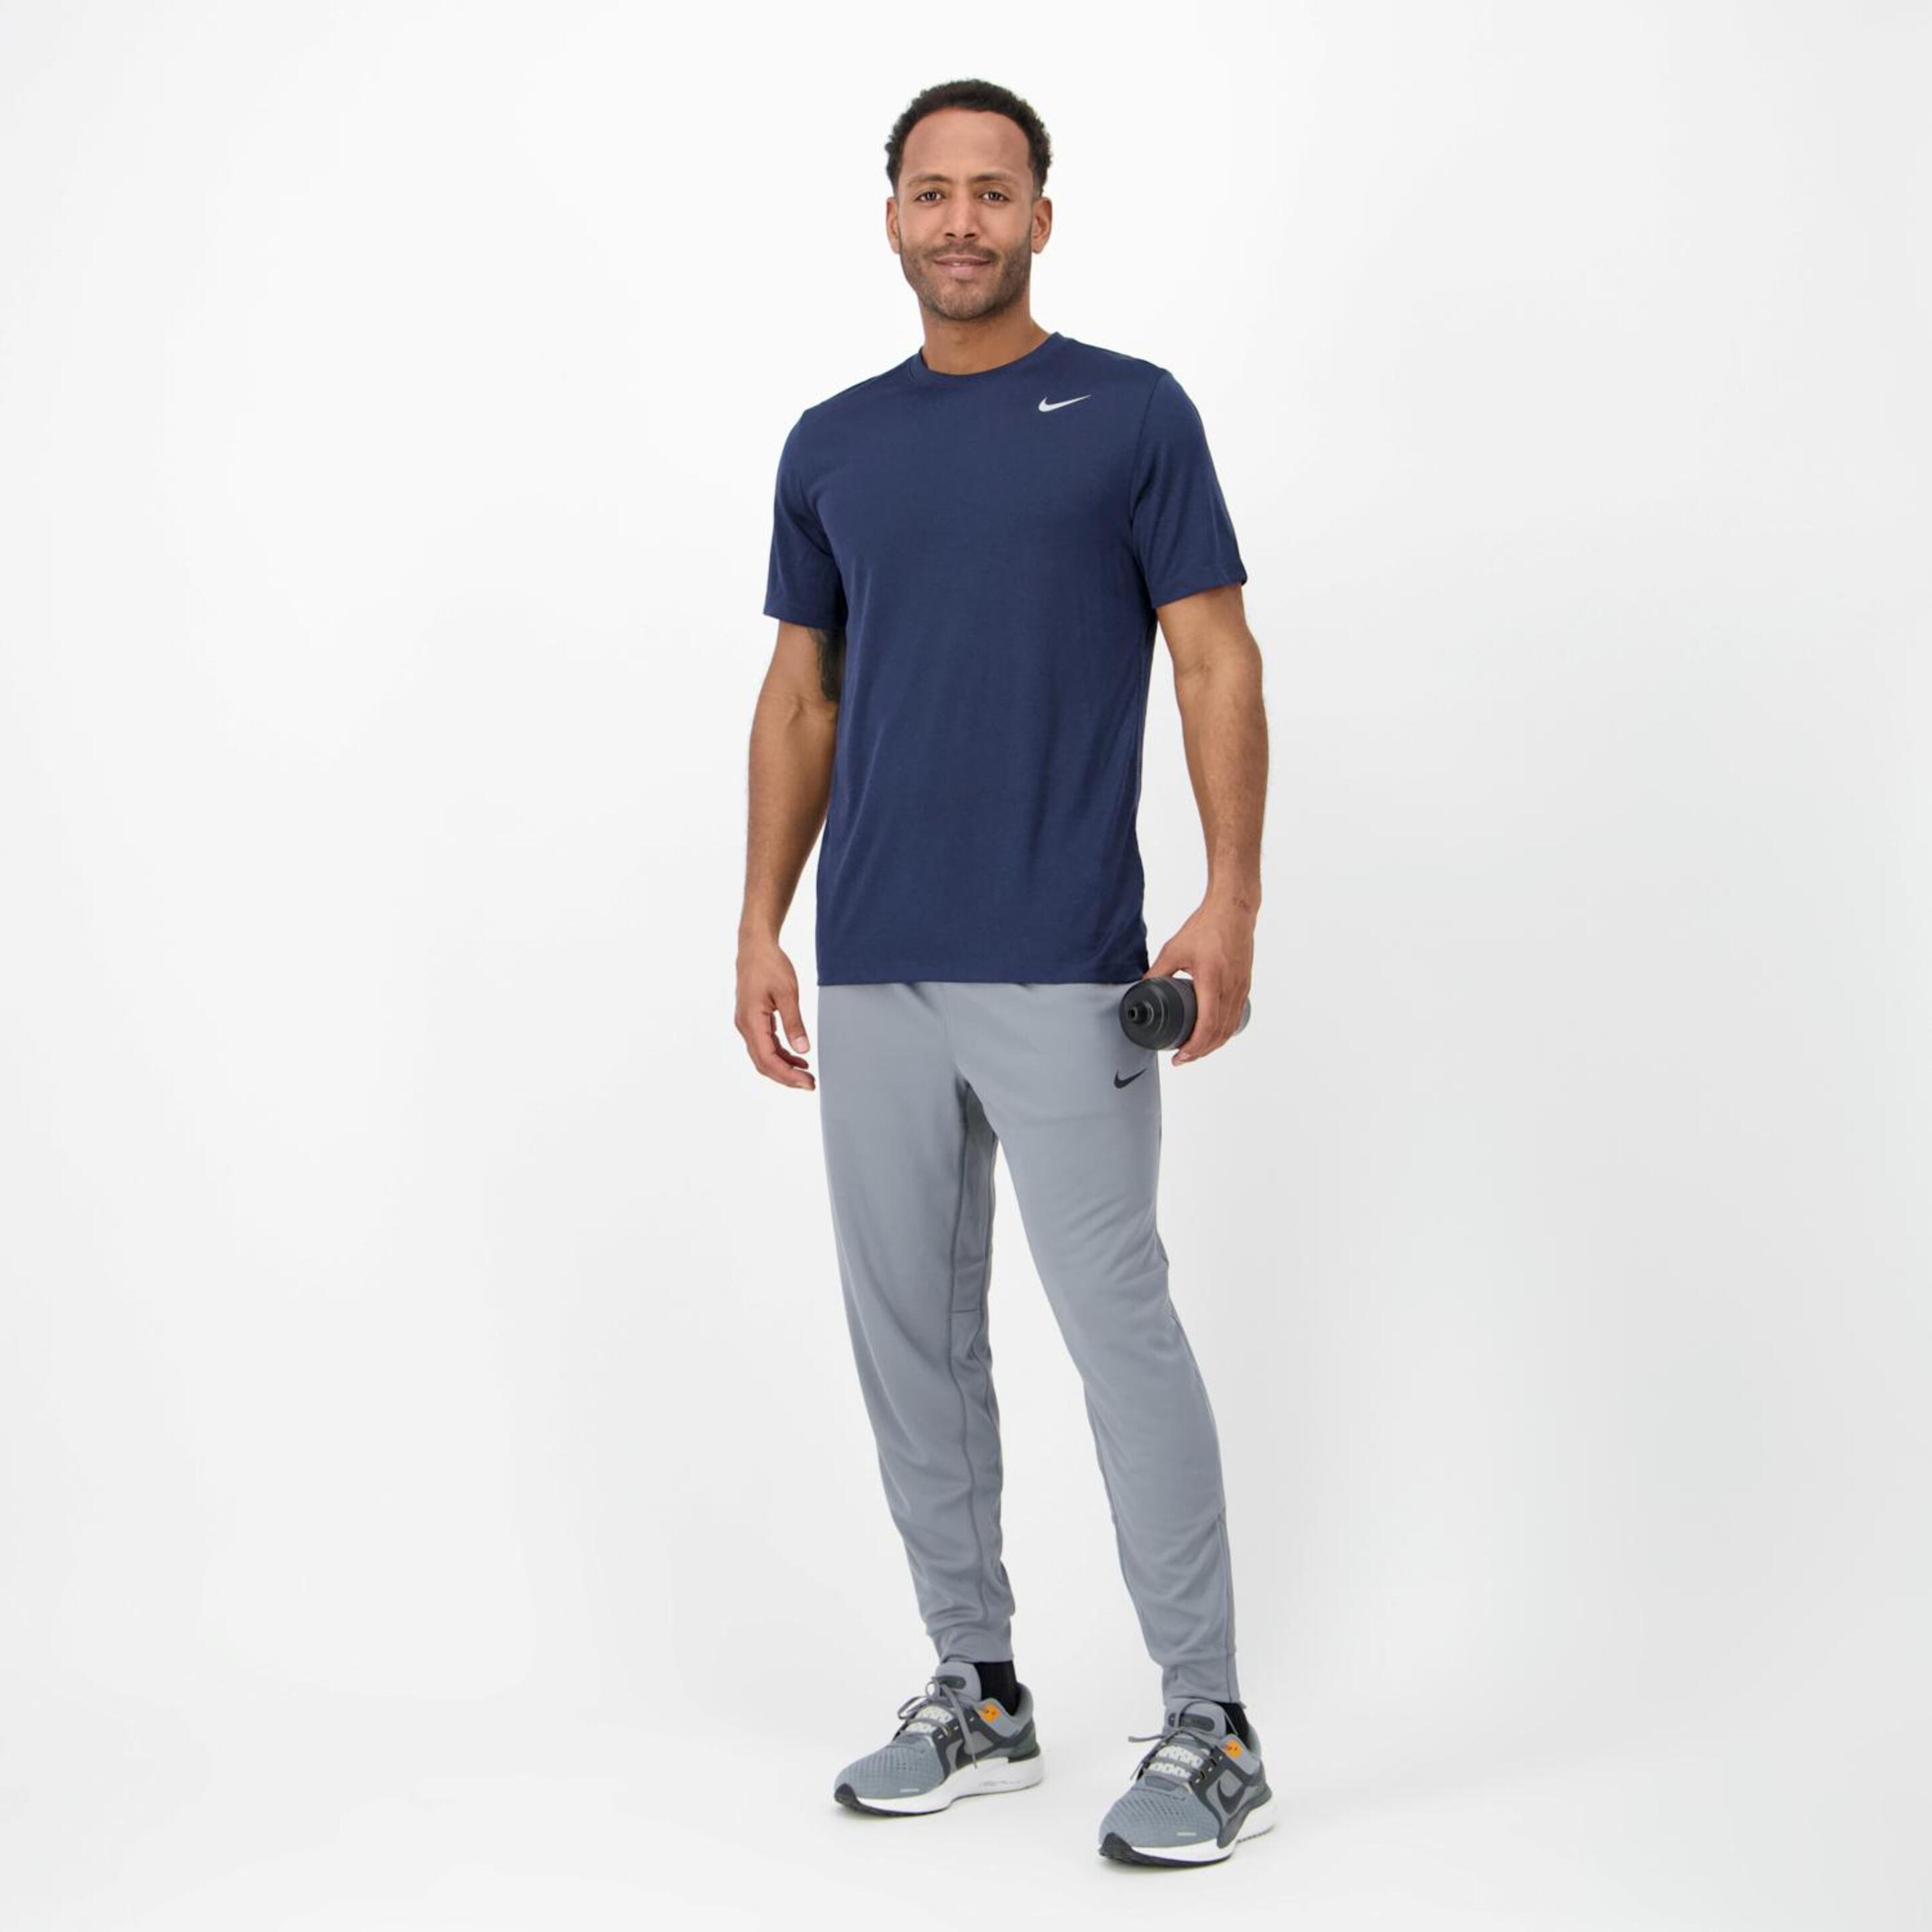 Nike Rlgd - Marino - Camiseta Running Hombre  | Sprinter